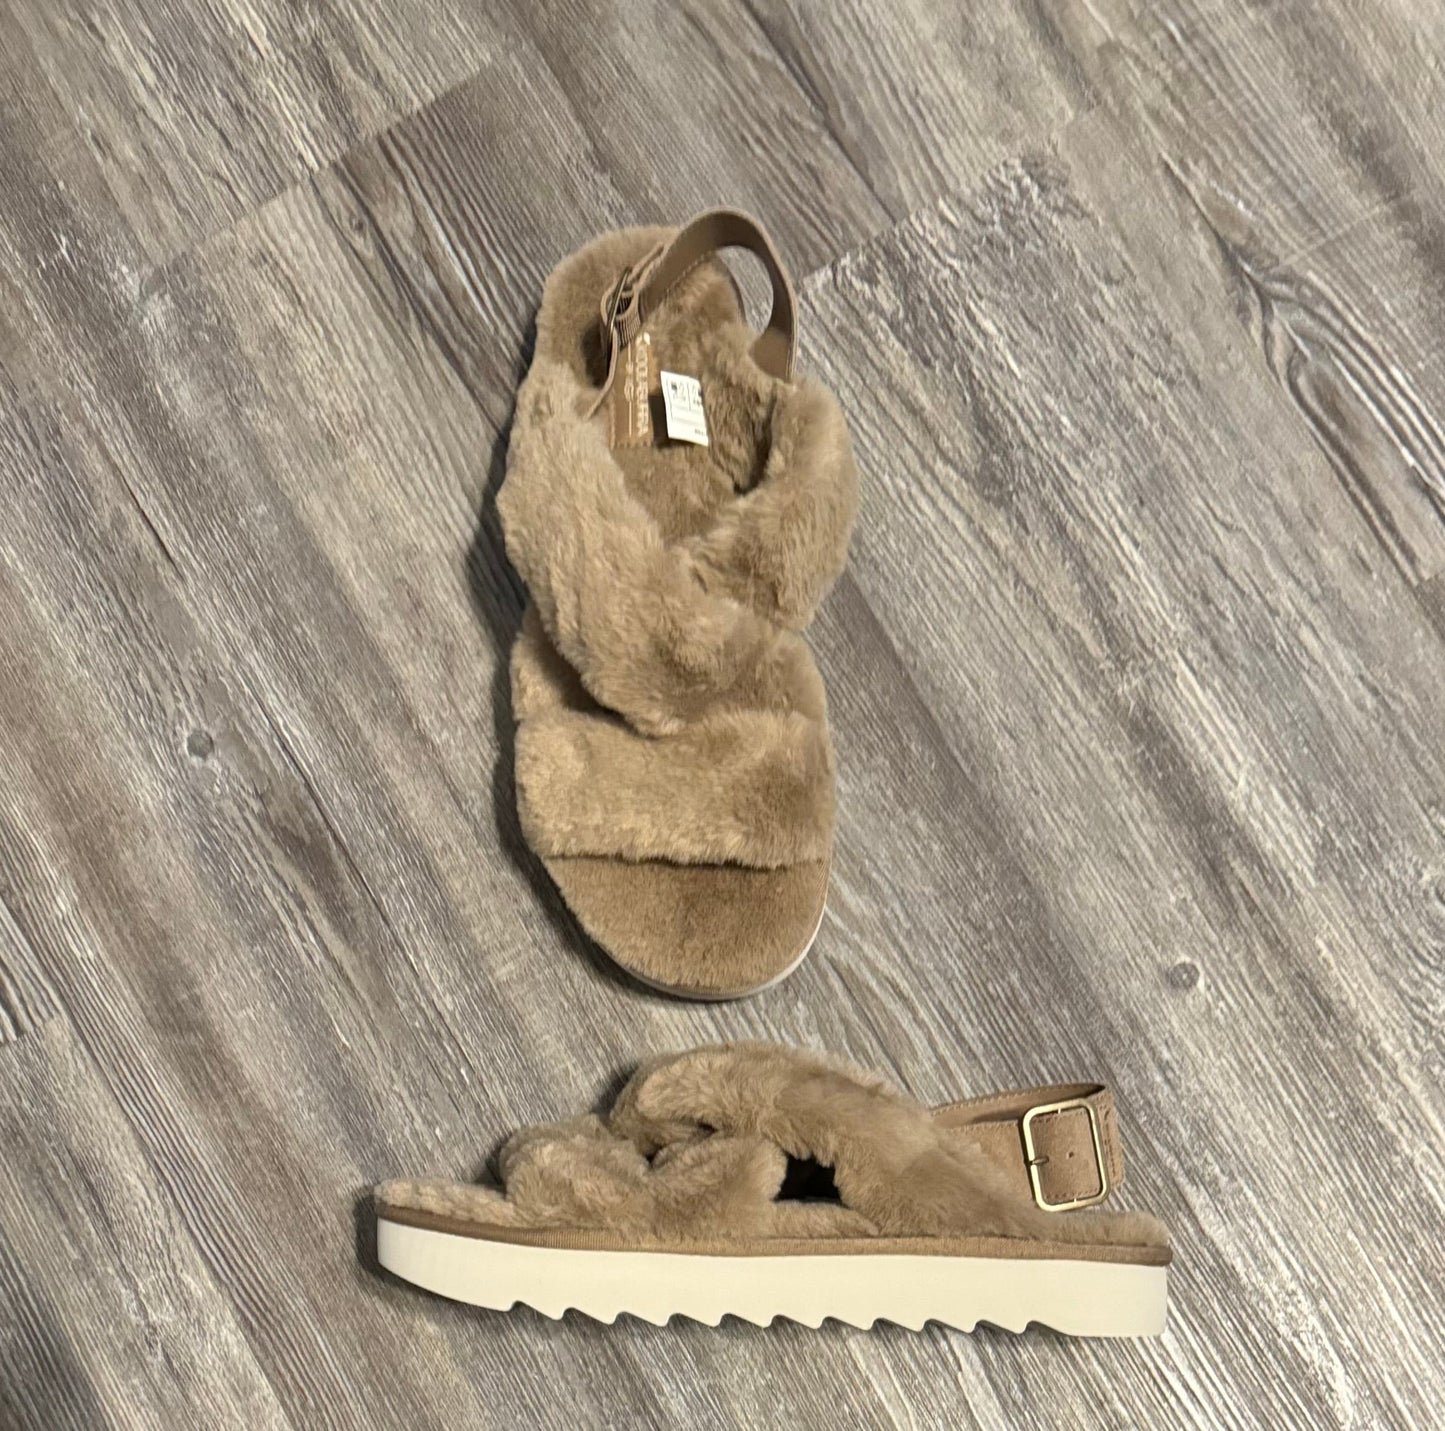 Sandals Flats By Koolaburra By Ugg  Size: 10